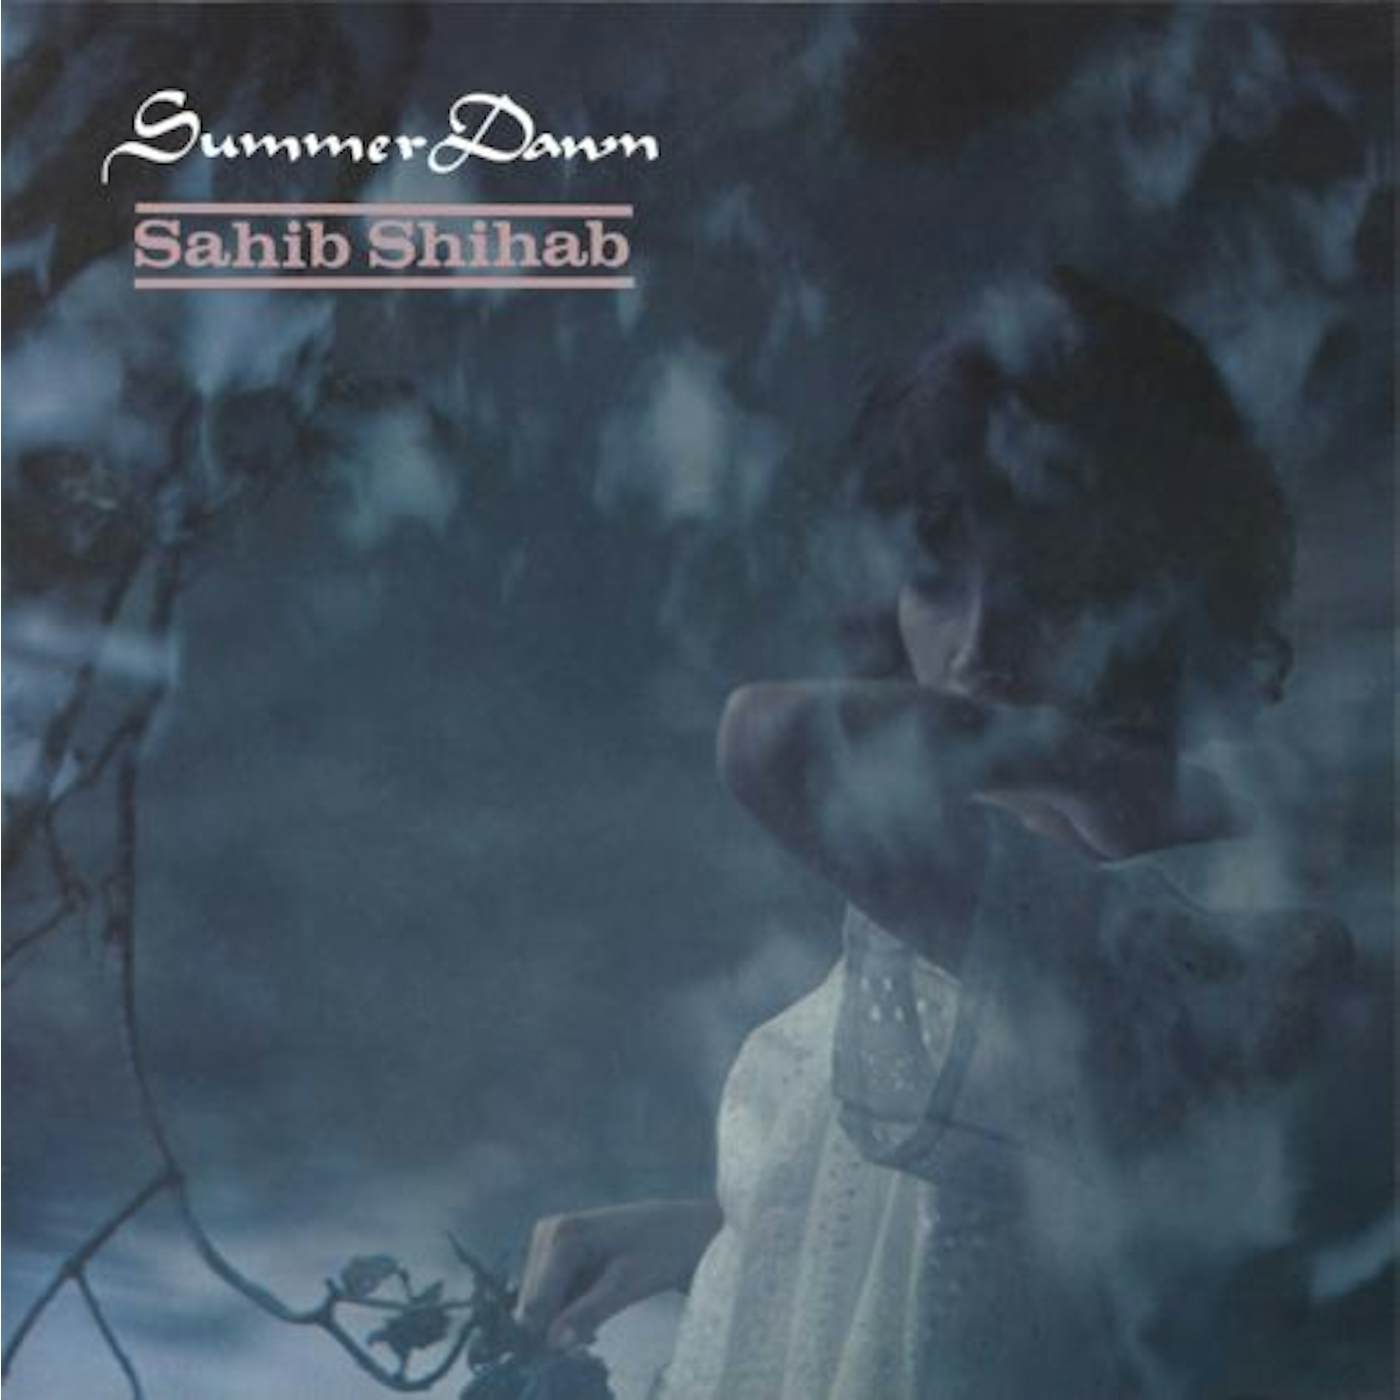 Sahib Shihab Summer Dawn Vinyl Record